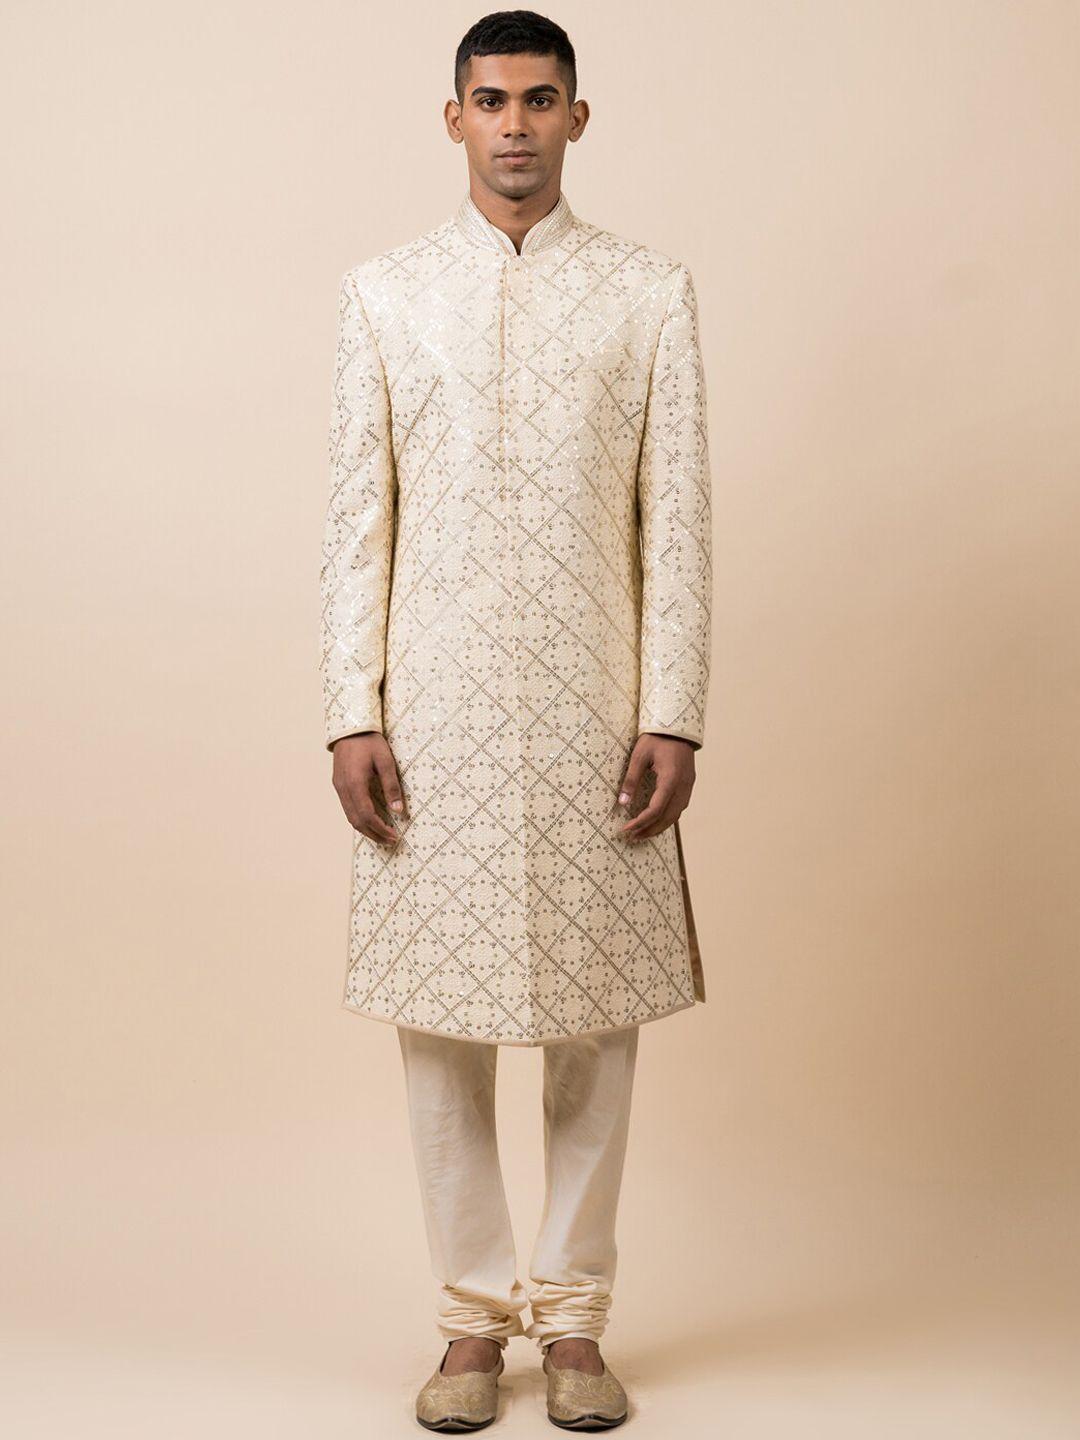 tasva-men-beige-&-gold-toned-embellished-sherwani